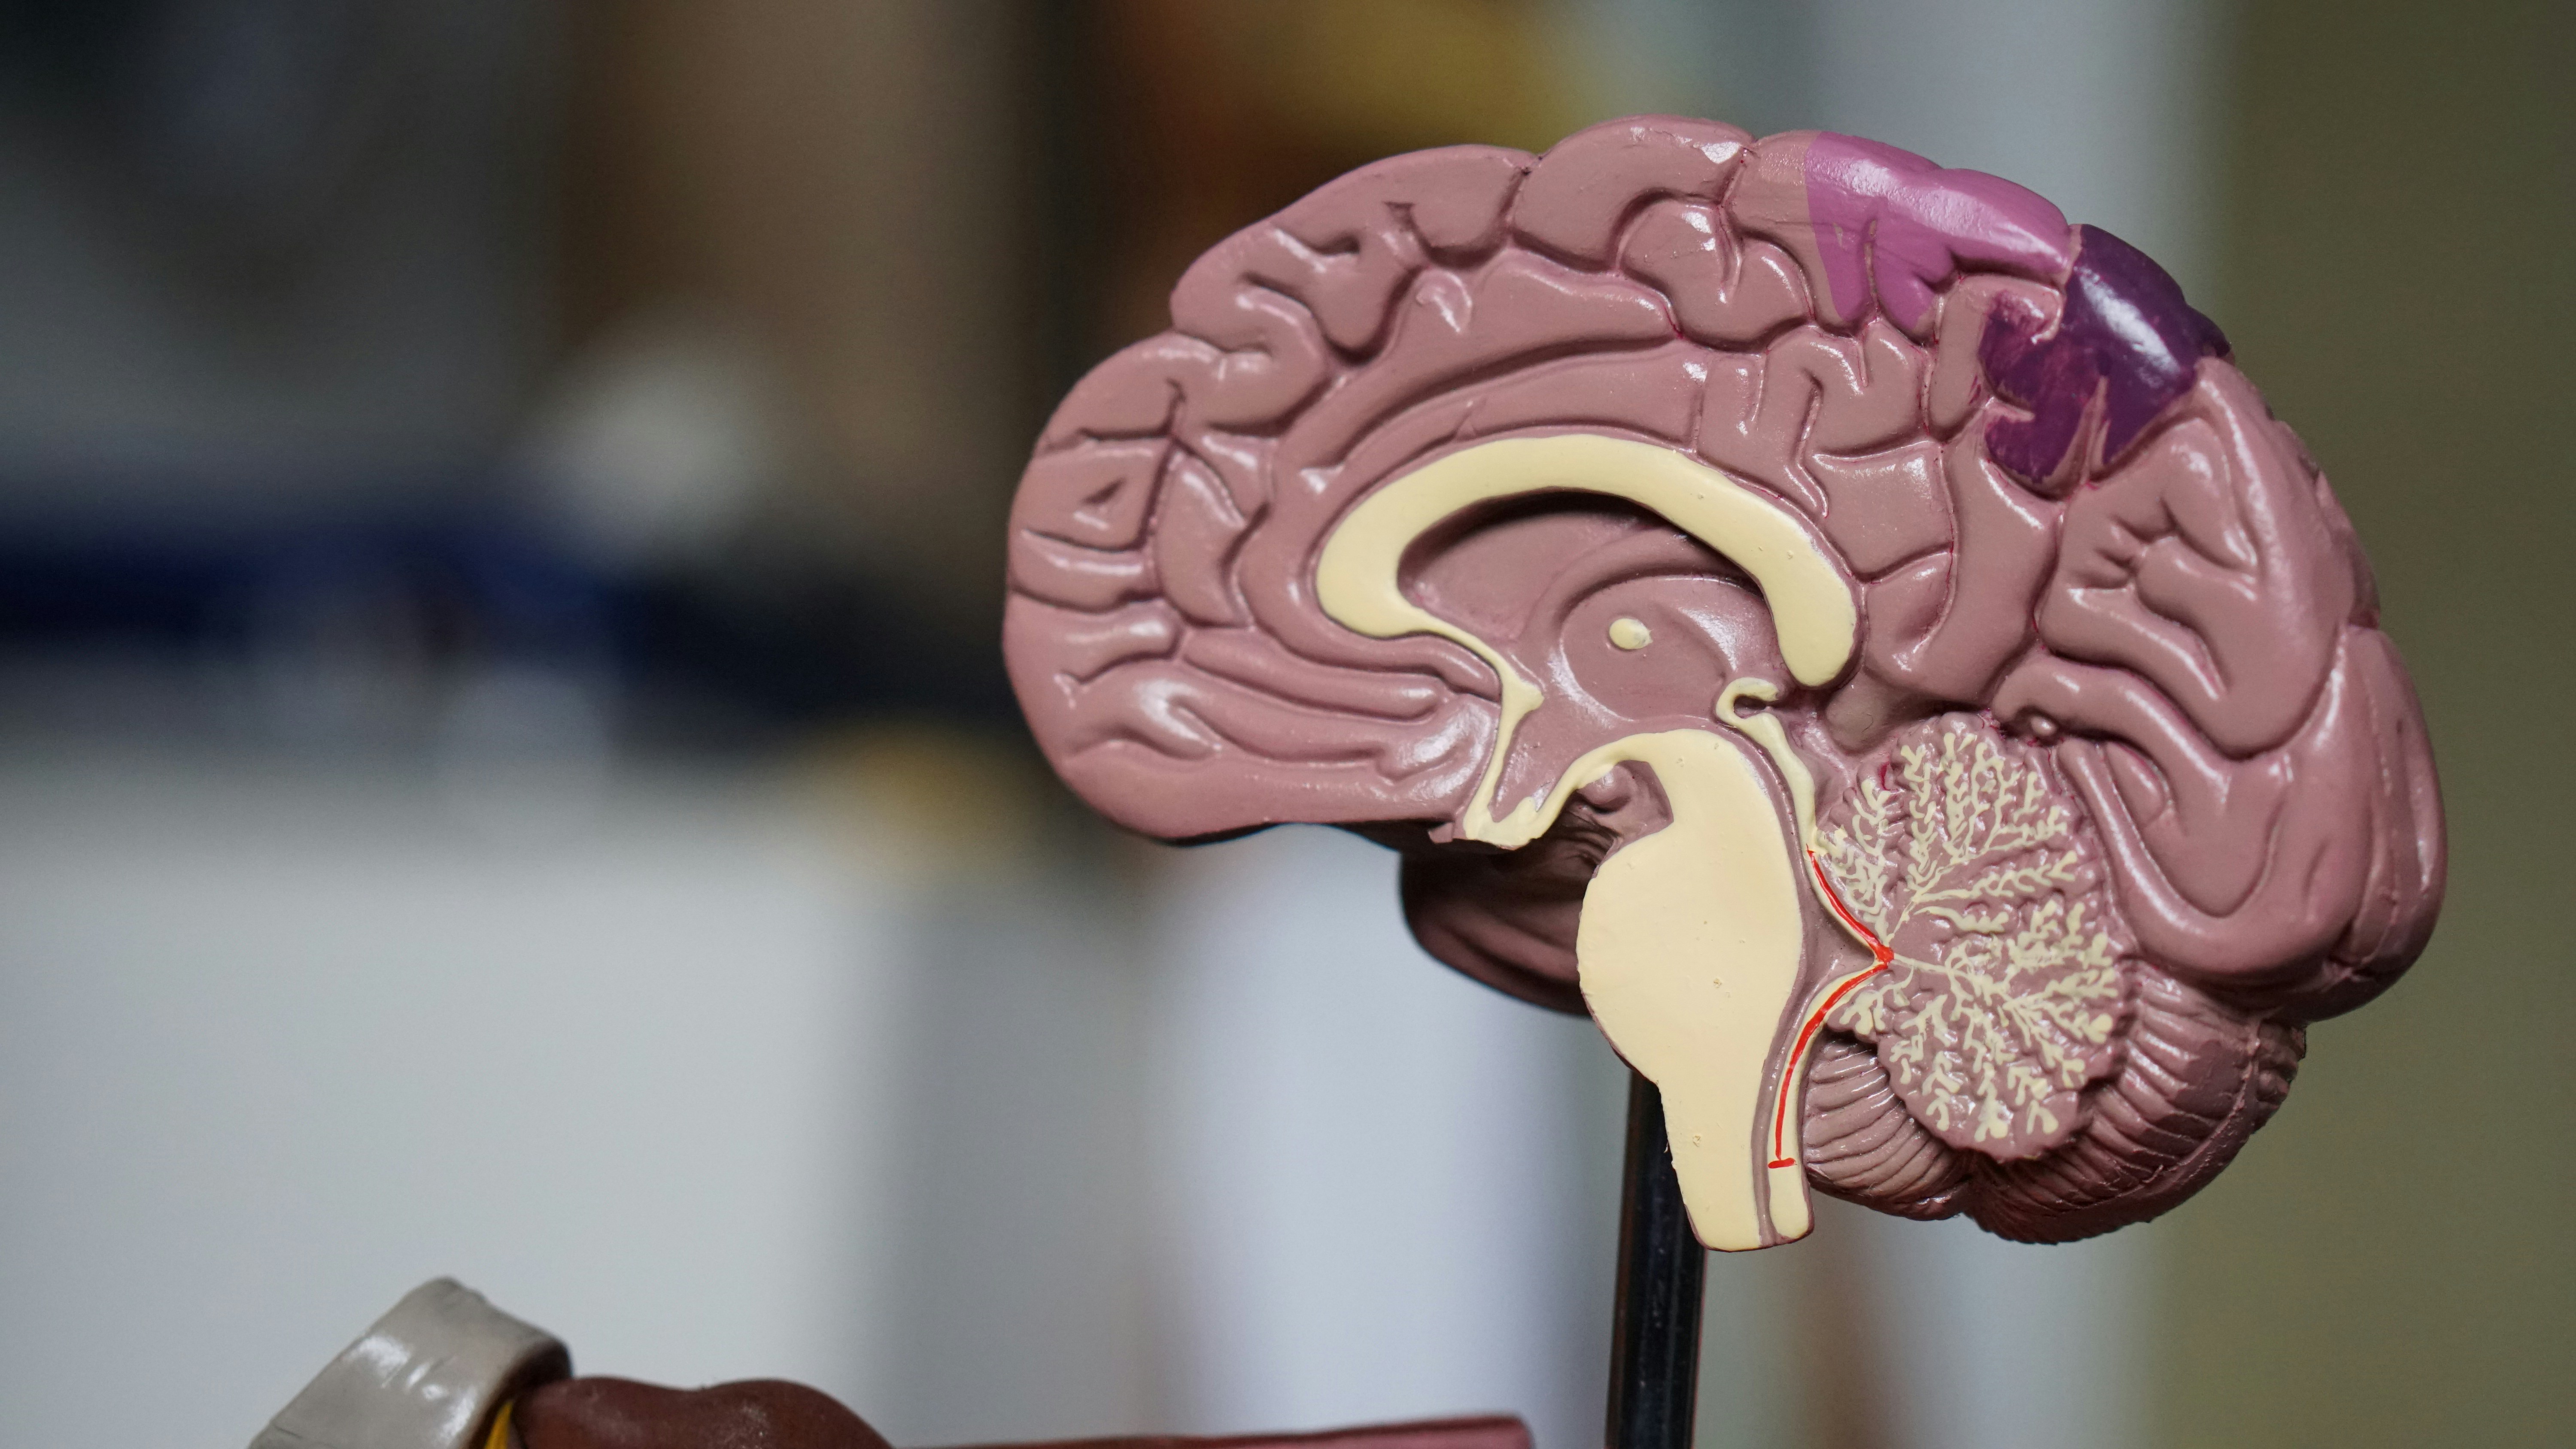 Understanding Dementia: Exploring neurodegenerative disease through real world case studies